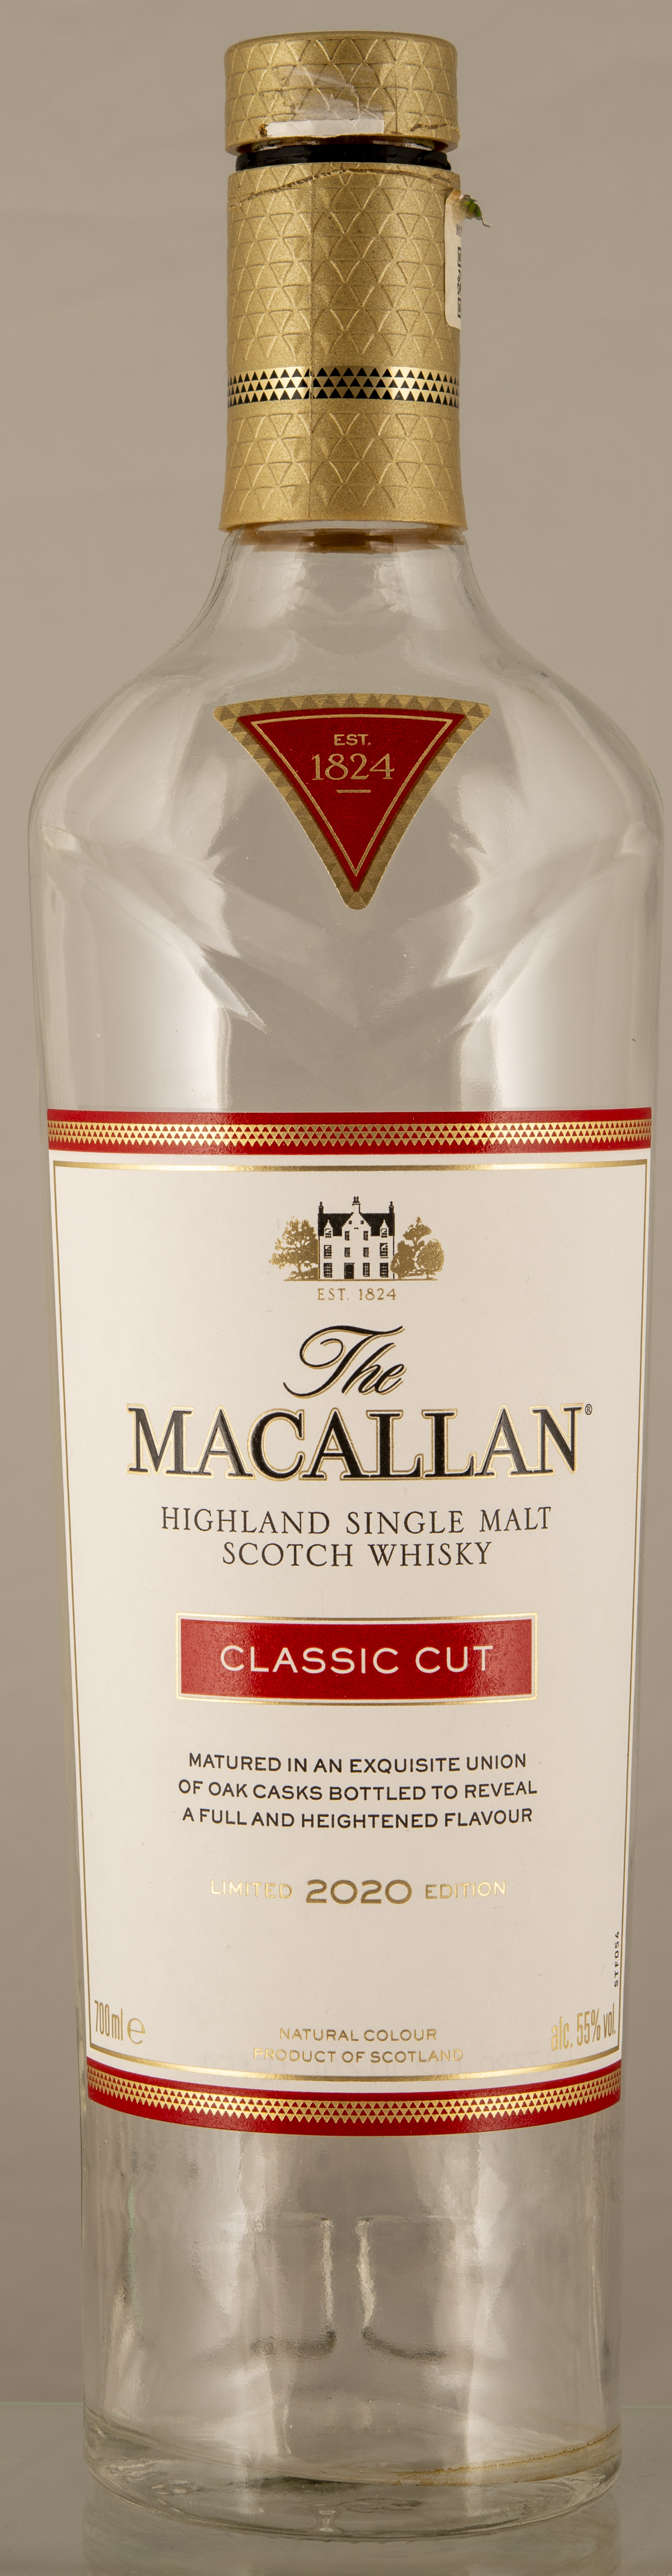 Billede: D85_8406 - MacAllan Classic Cut Limited 2020 edition - bottle front.jpg